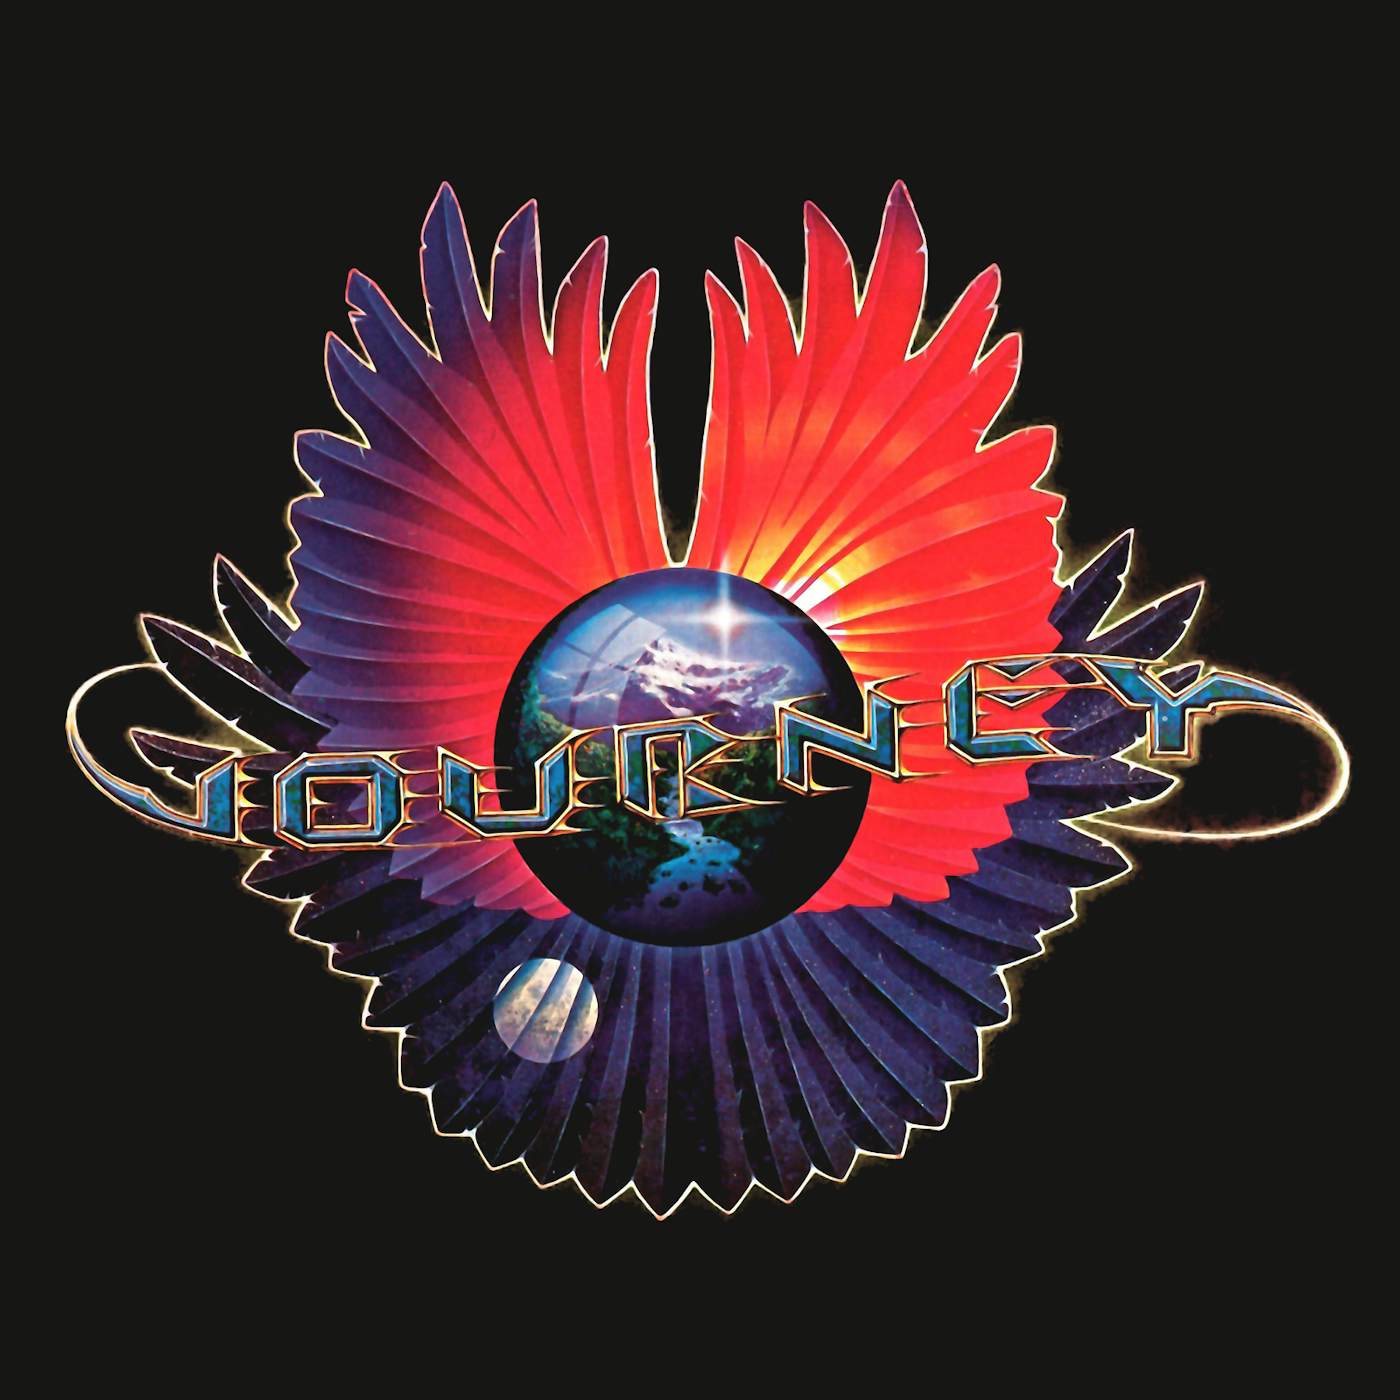 Journey Logo Concert T-shirt for Hard Rock LV 